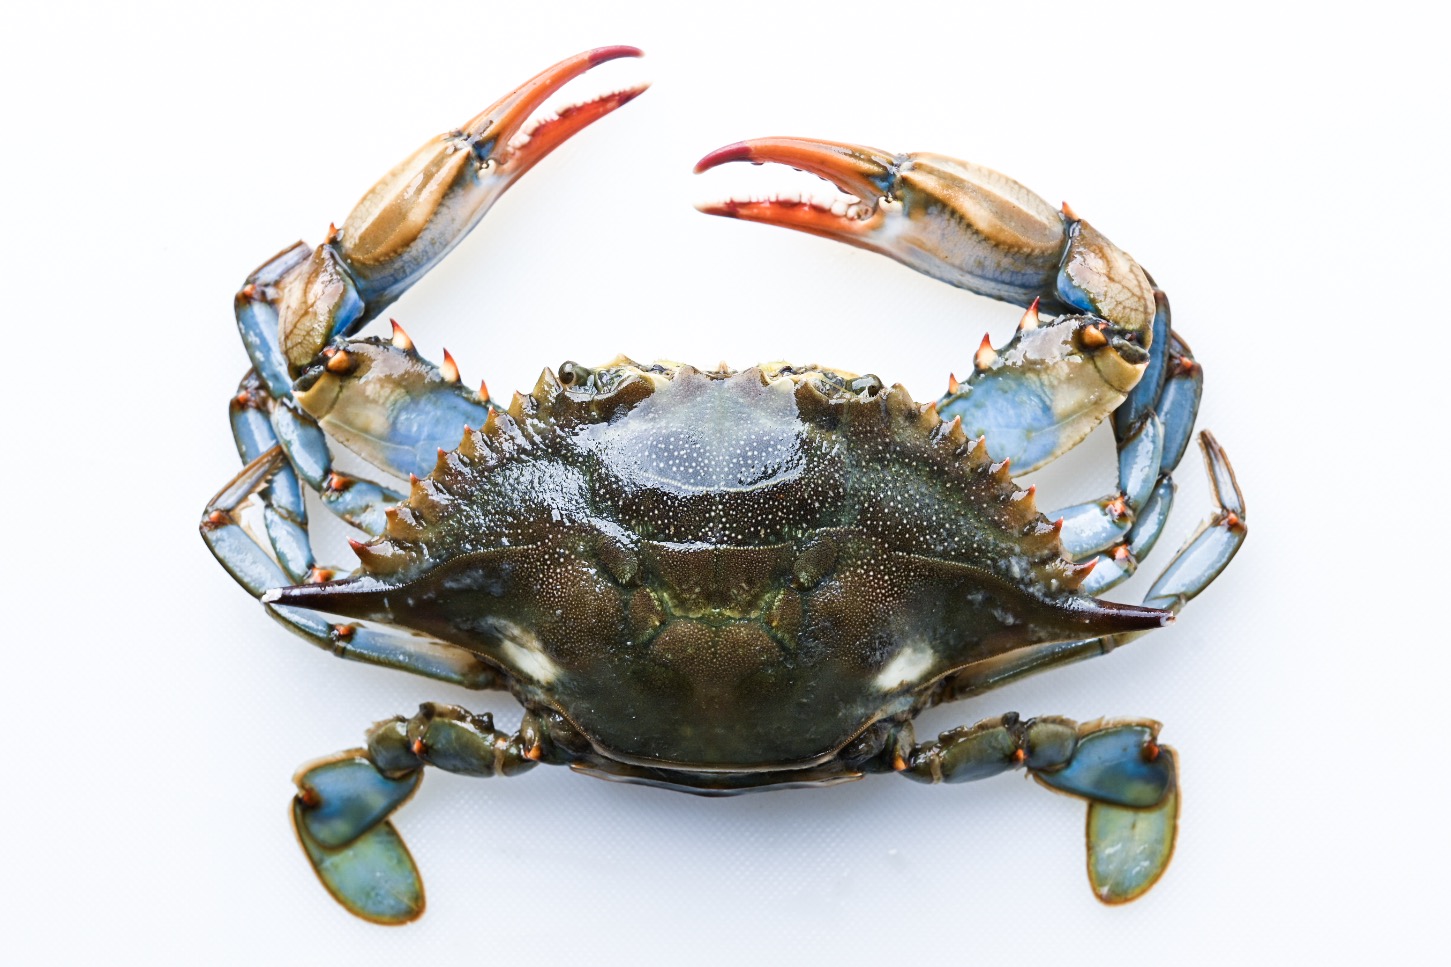 A fresh blue crab from Grand Isle, Louisiana